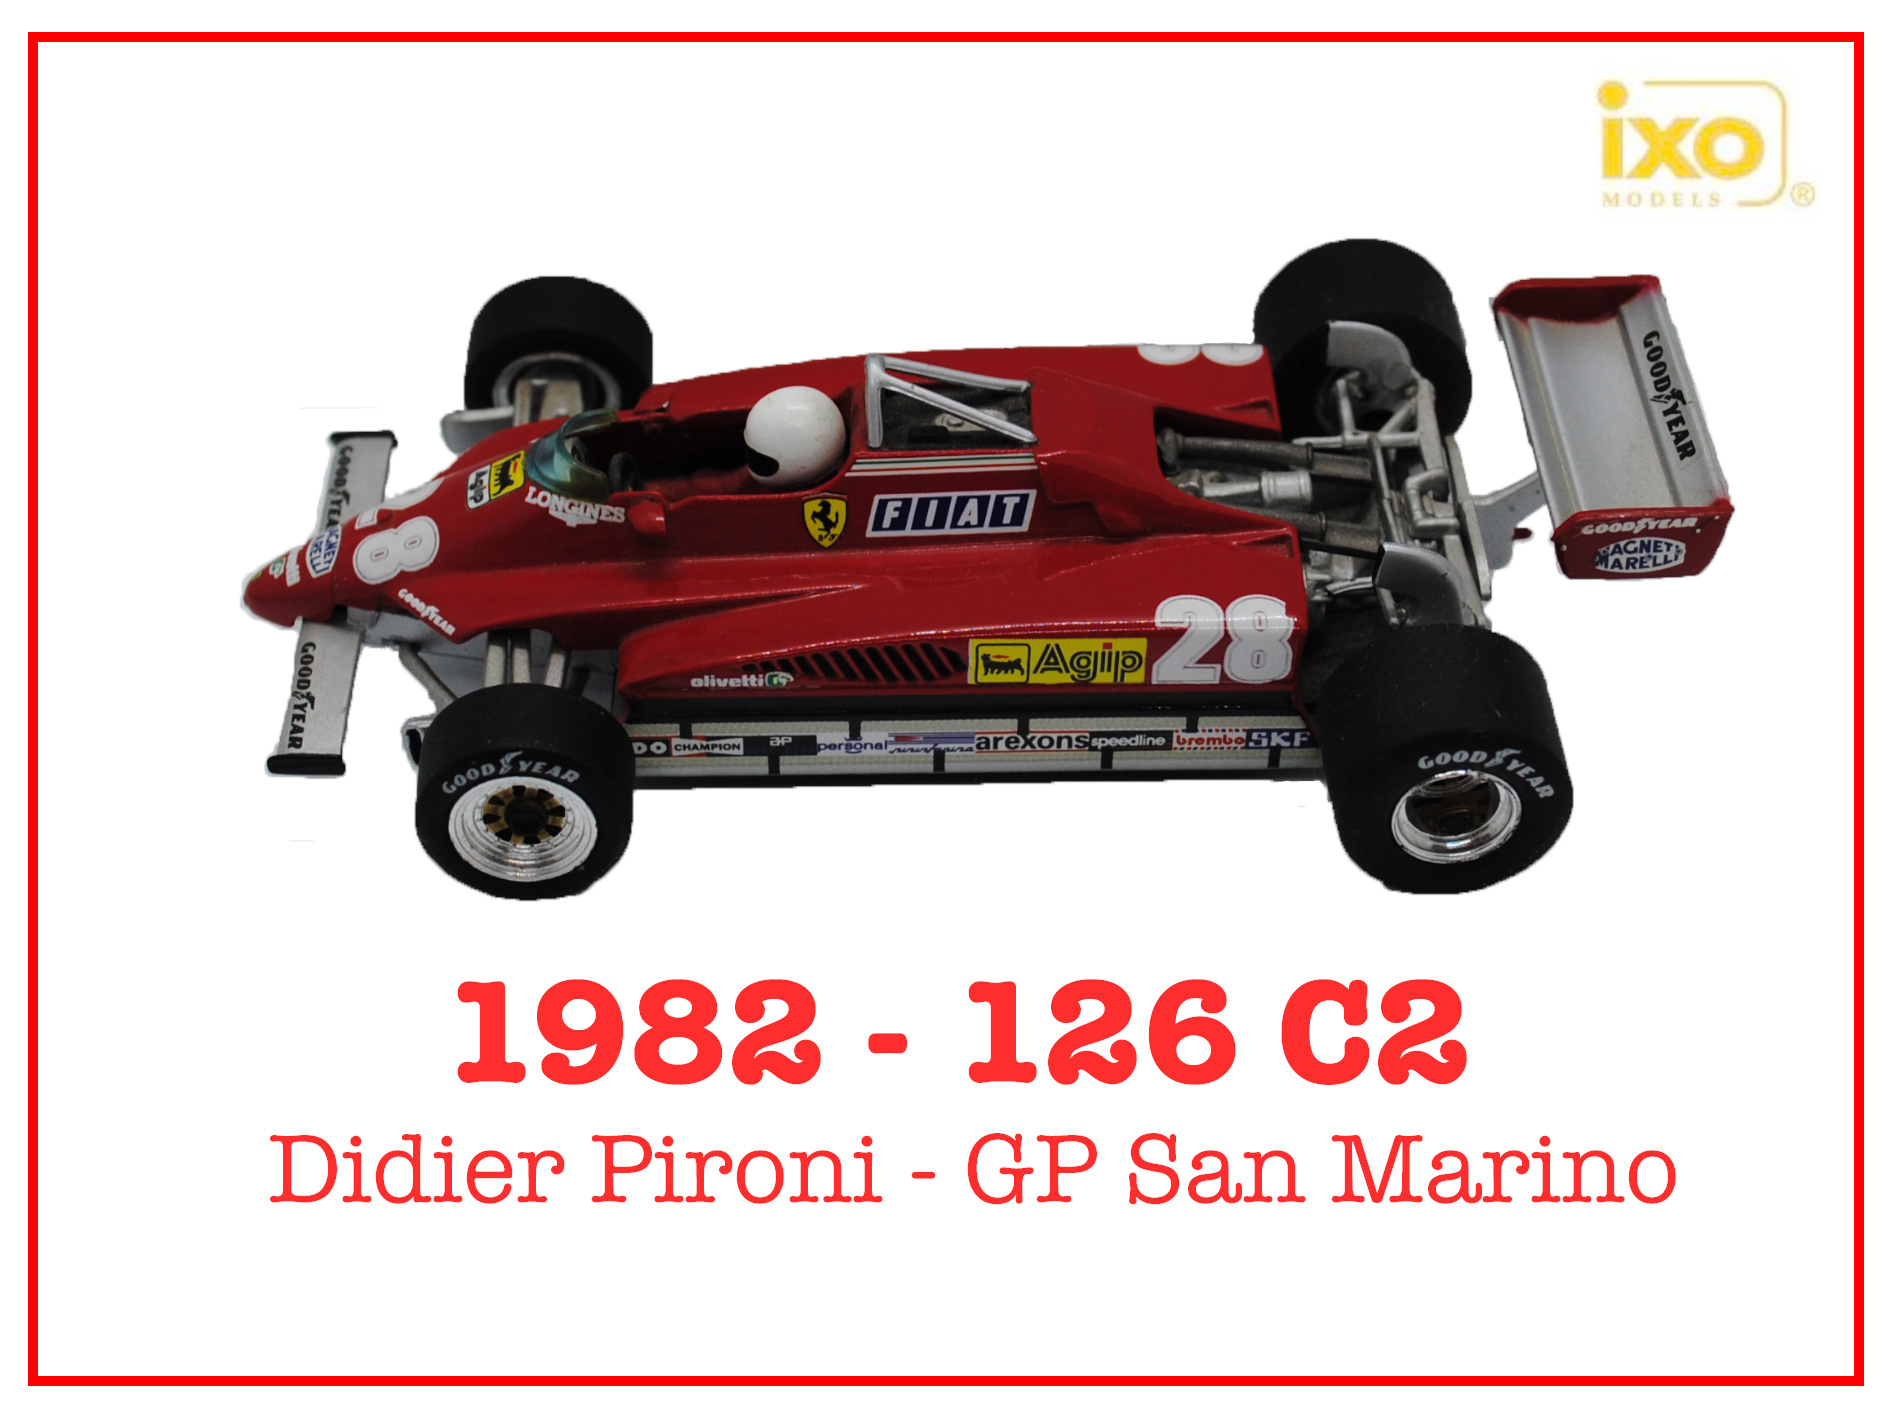 Immagine 126 C2 - Didier Pironi GP Nurburgring